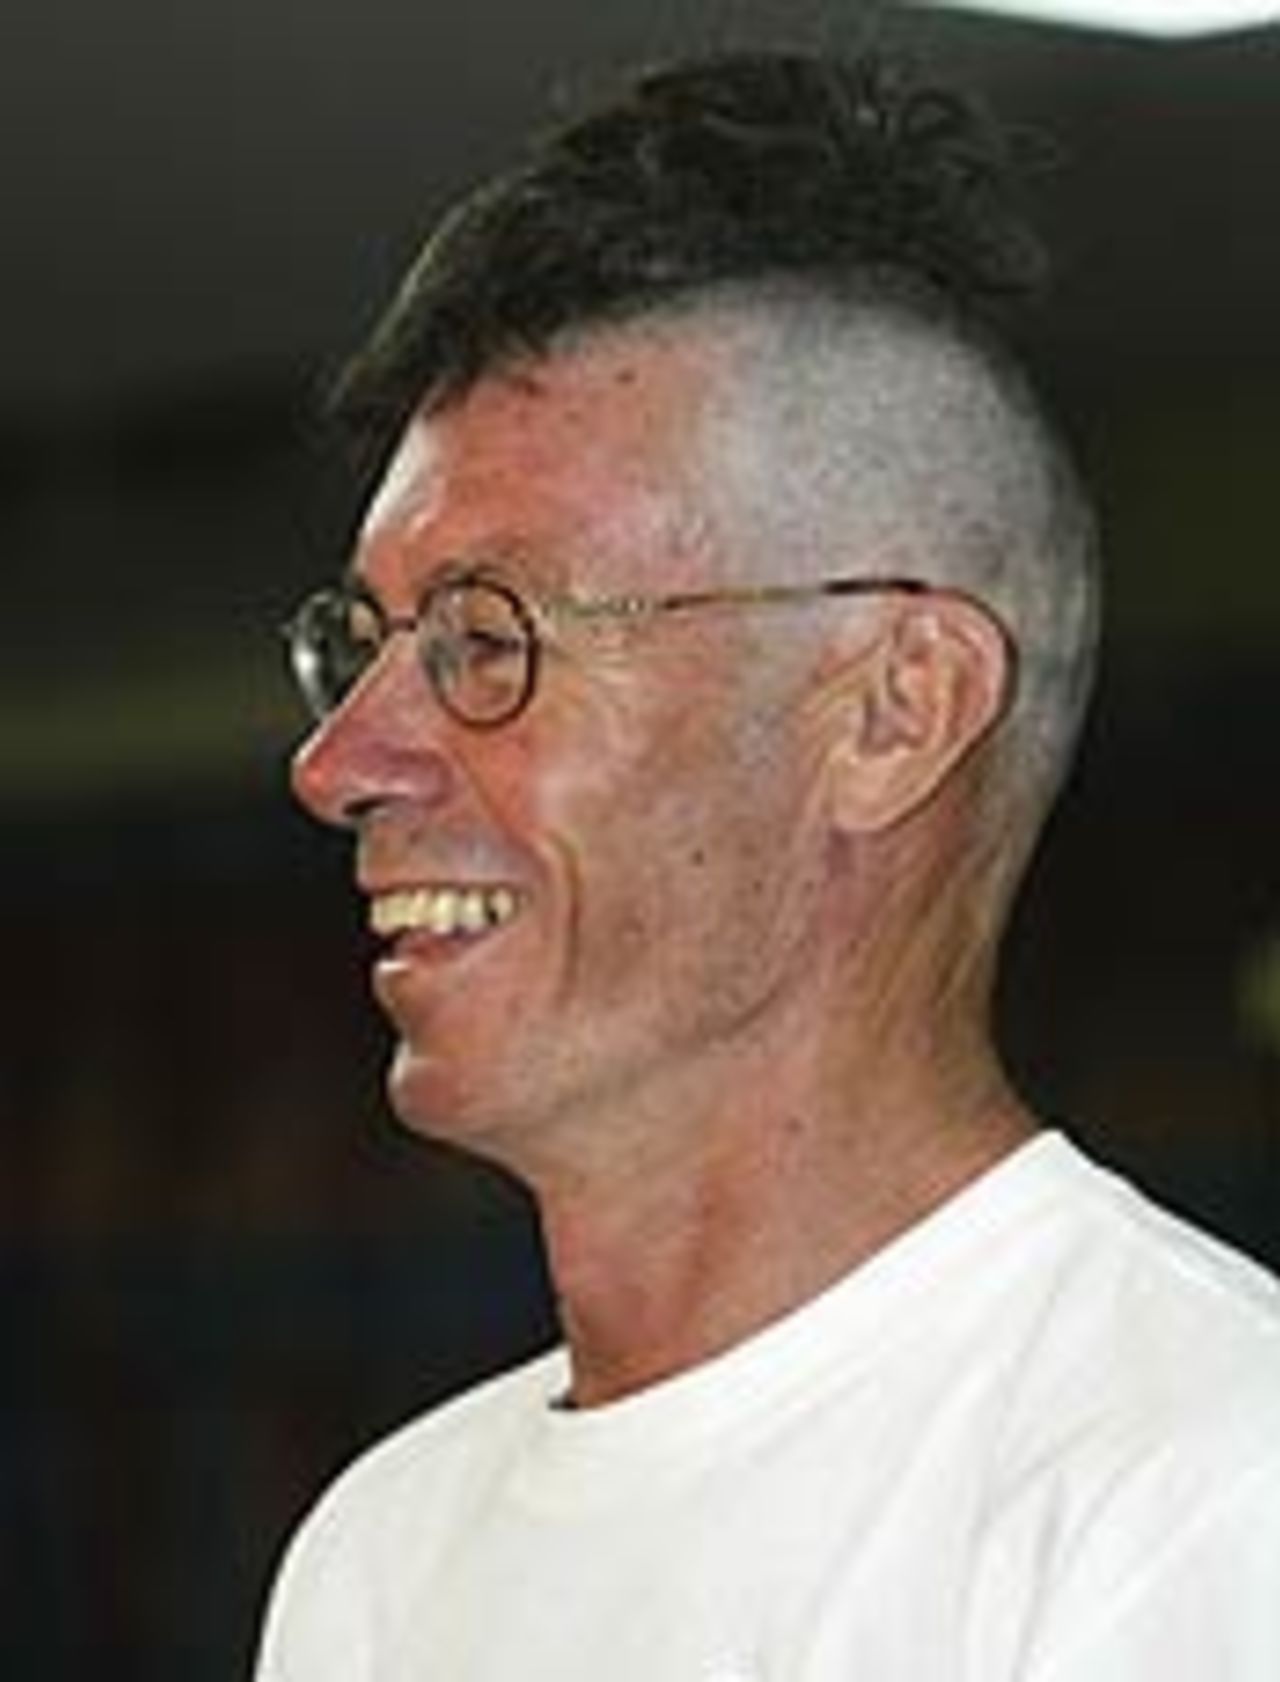 John Buchanan with shaved head, Grenada, May 31, 2003